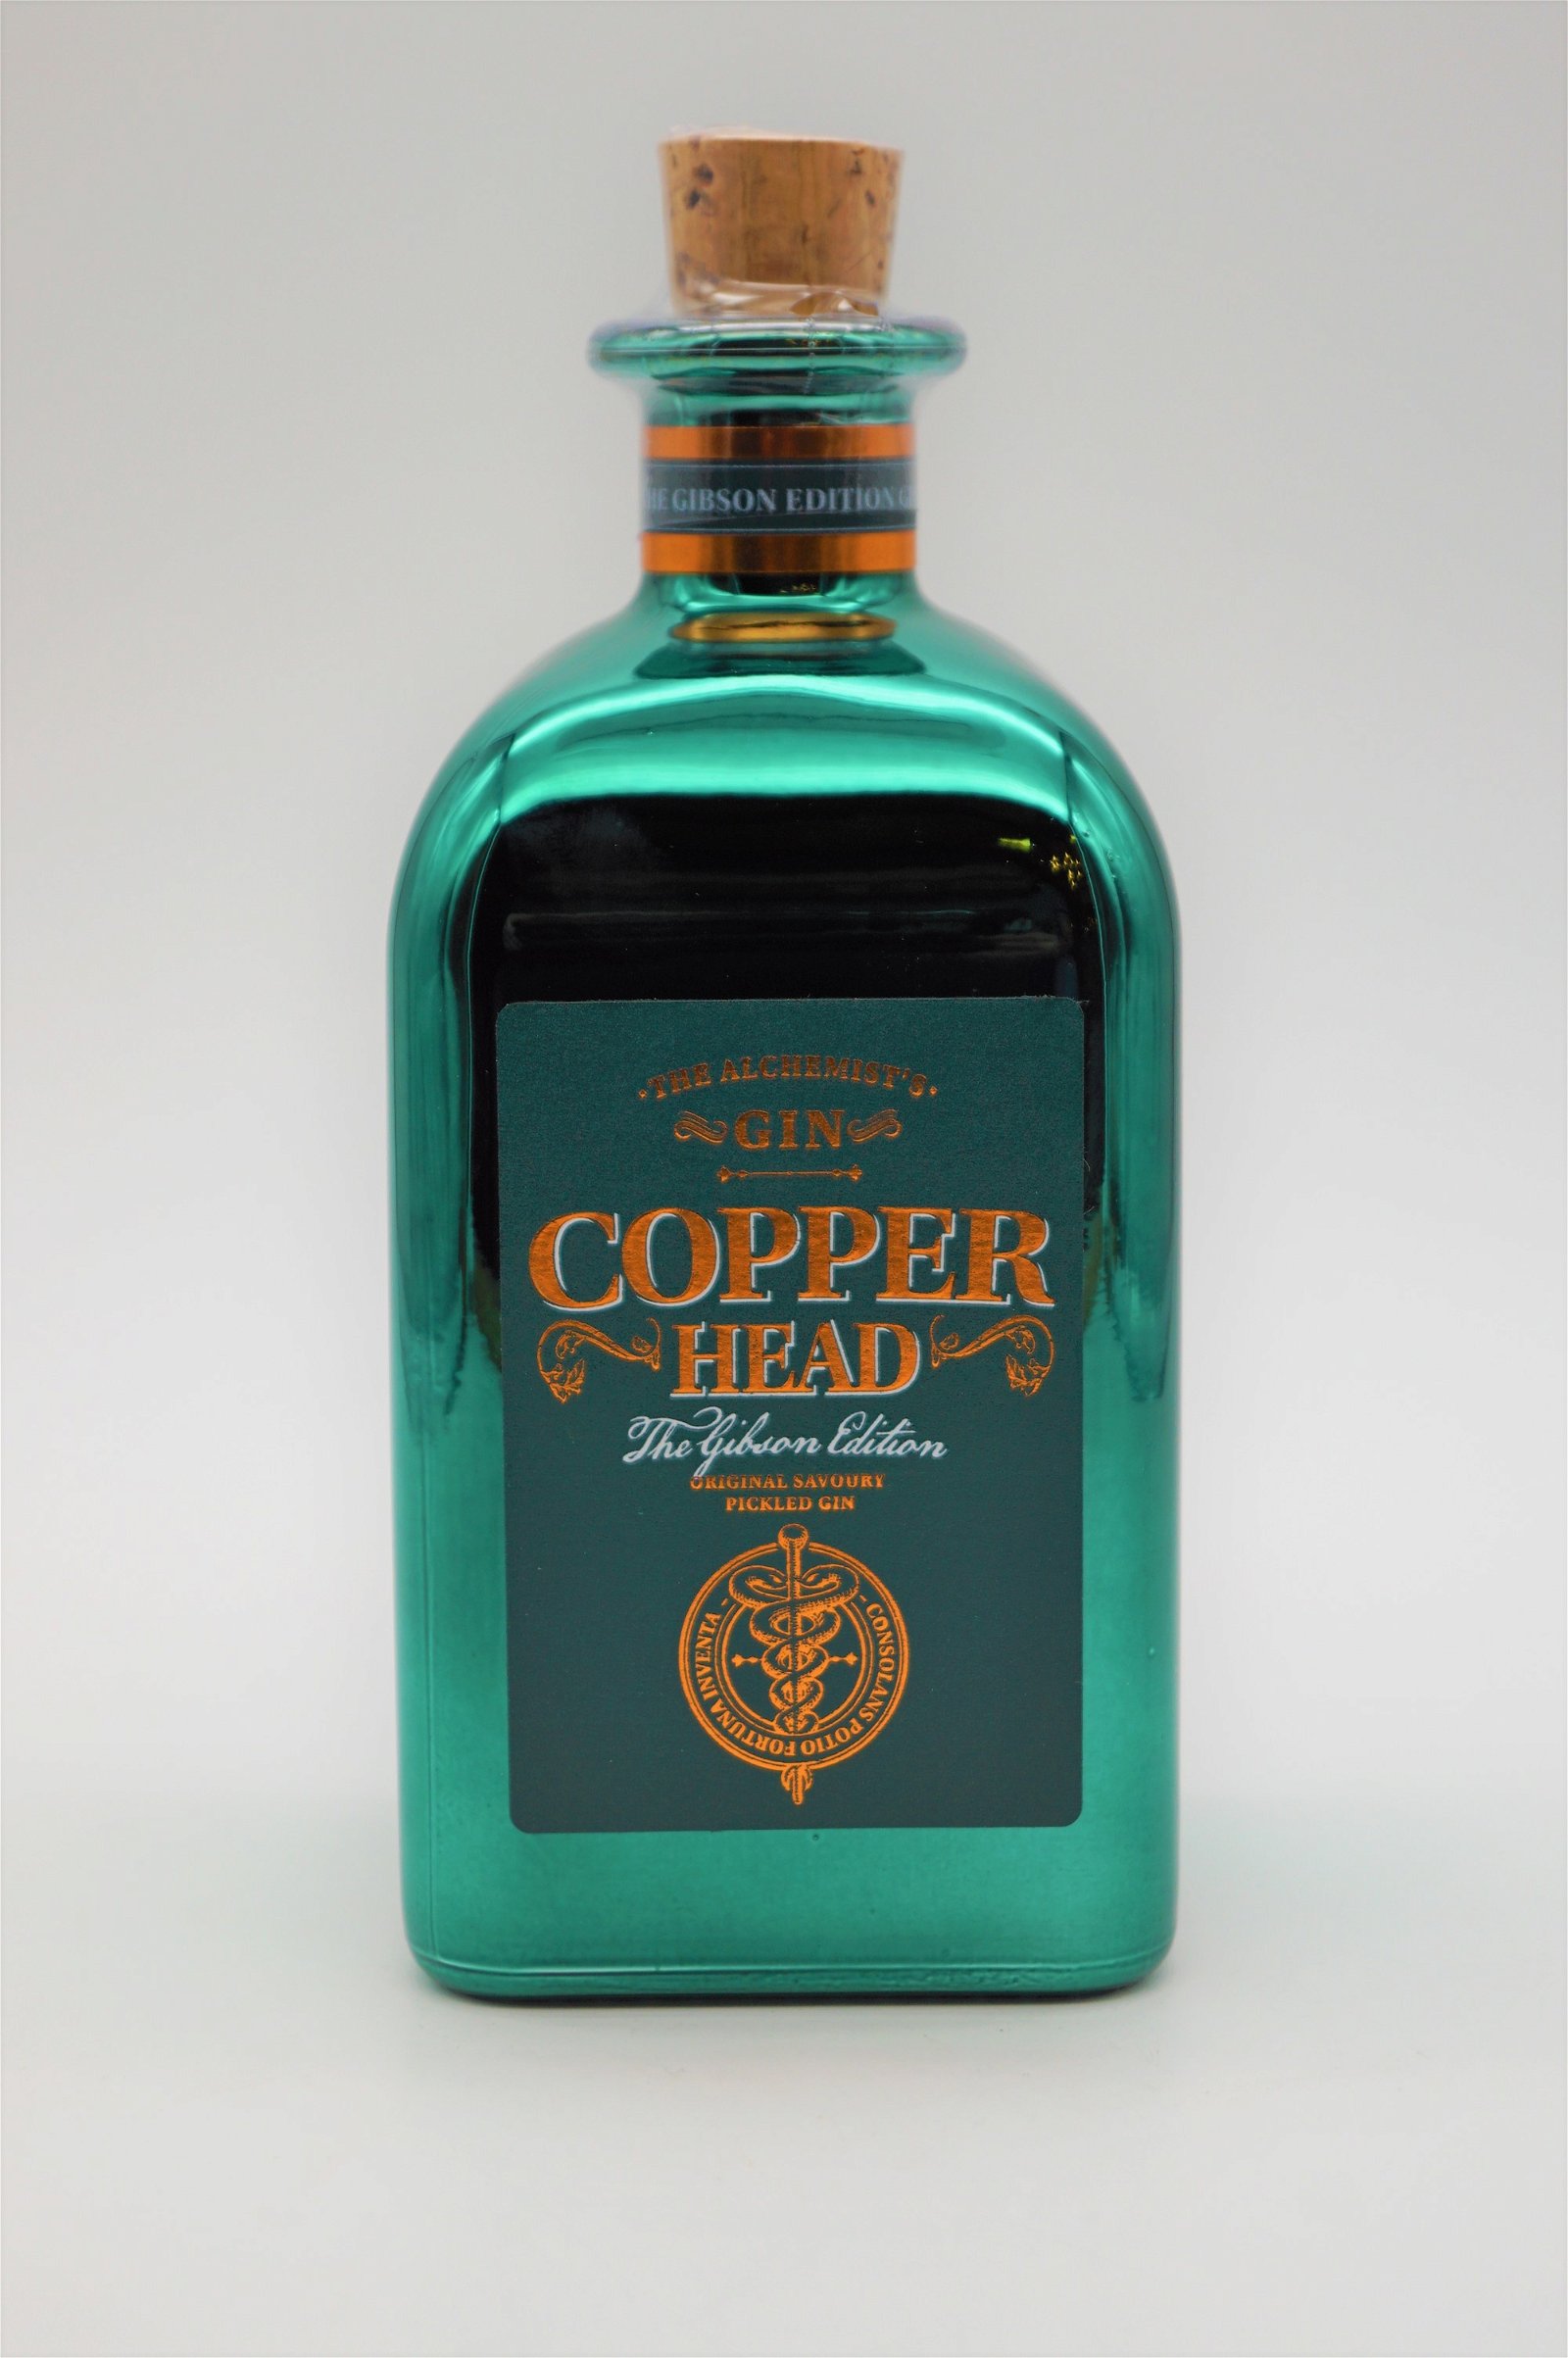 Copperhead Gibson Edition Gin